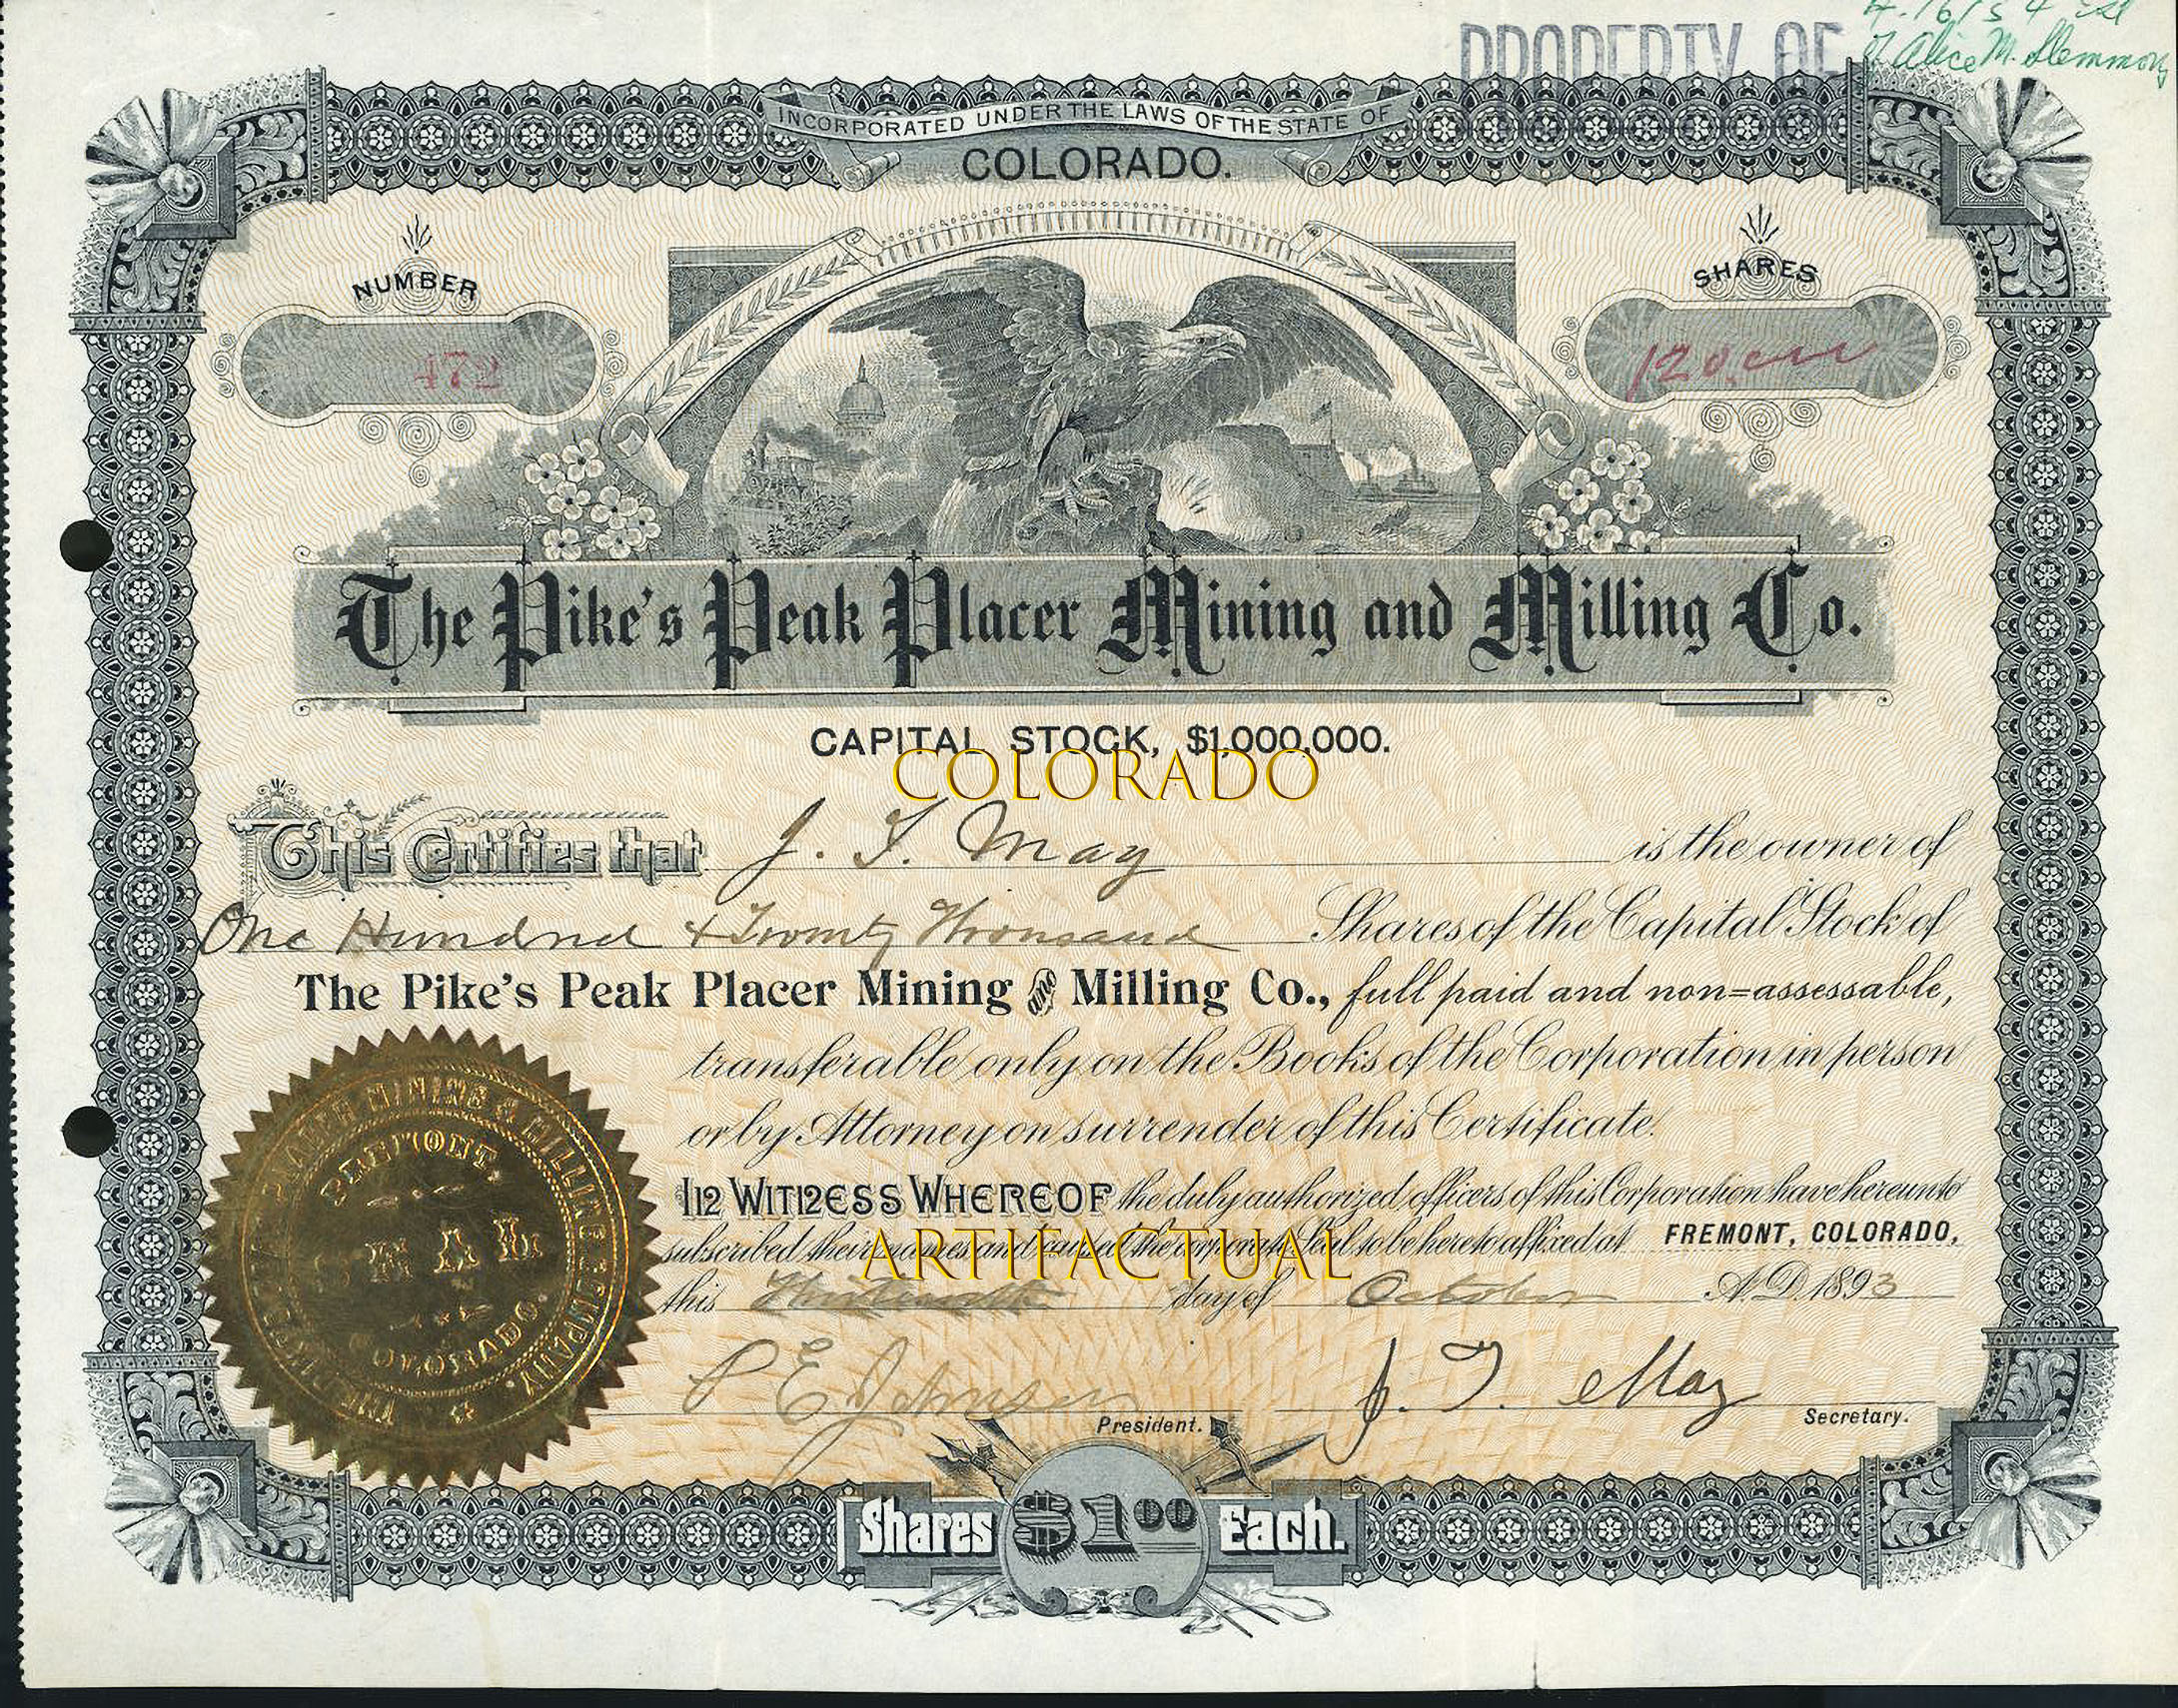 PIKE’S PEAK PLACER MINING & MILLING COMPANY Cripple Creek Colorado stock certificate 1893